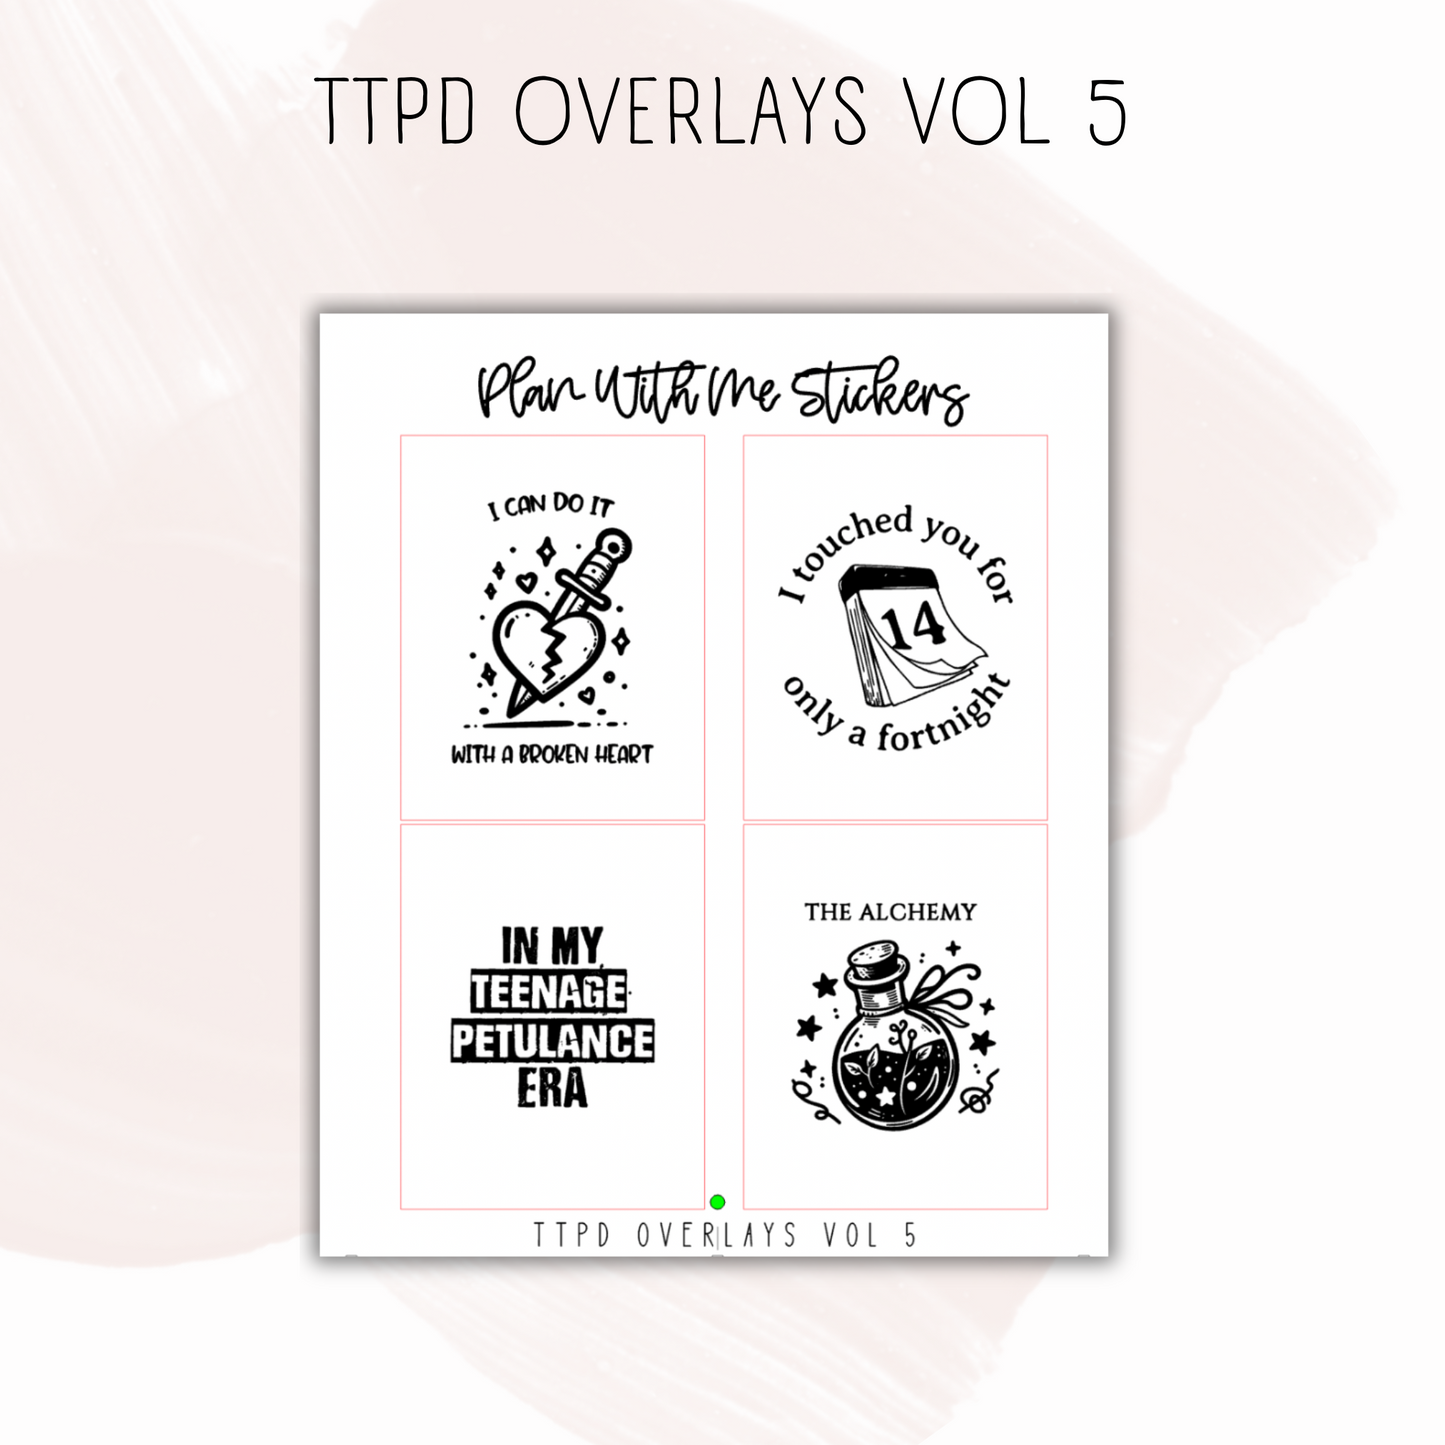 TTPD Overlays Vol 5